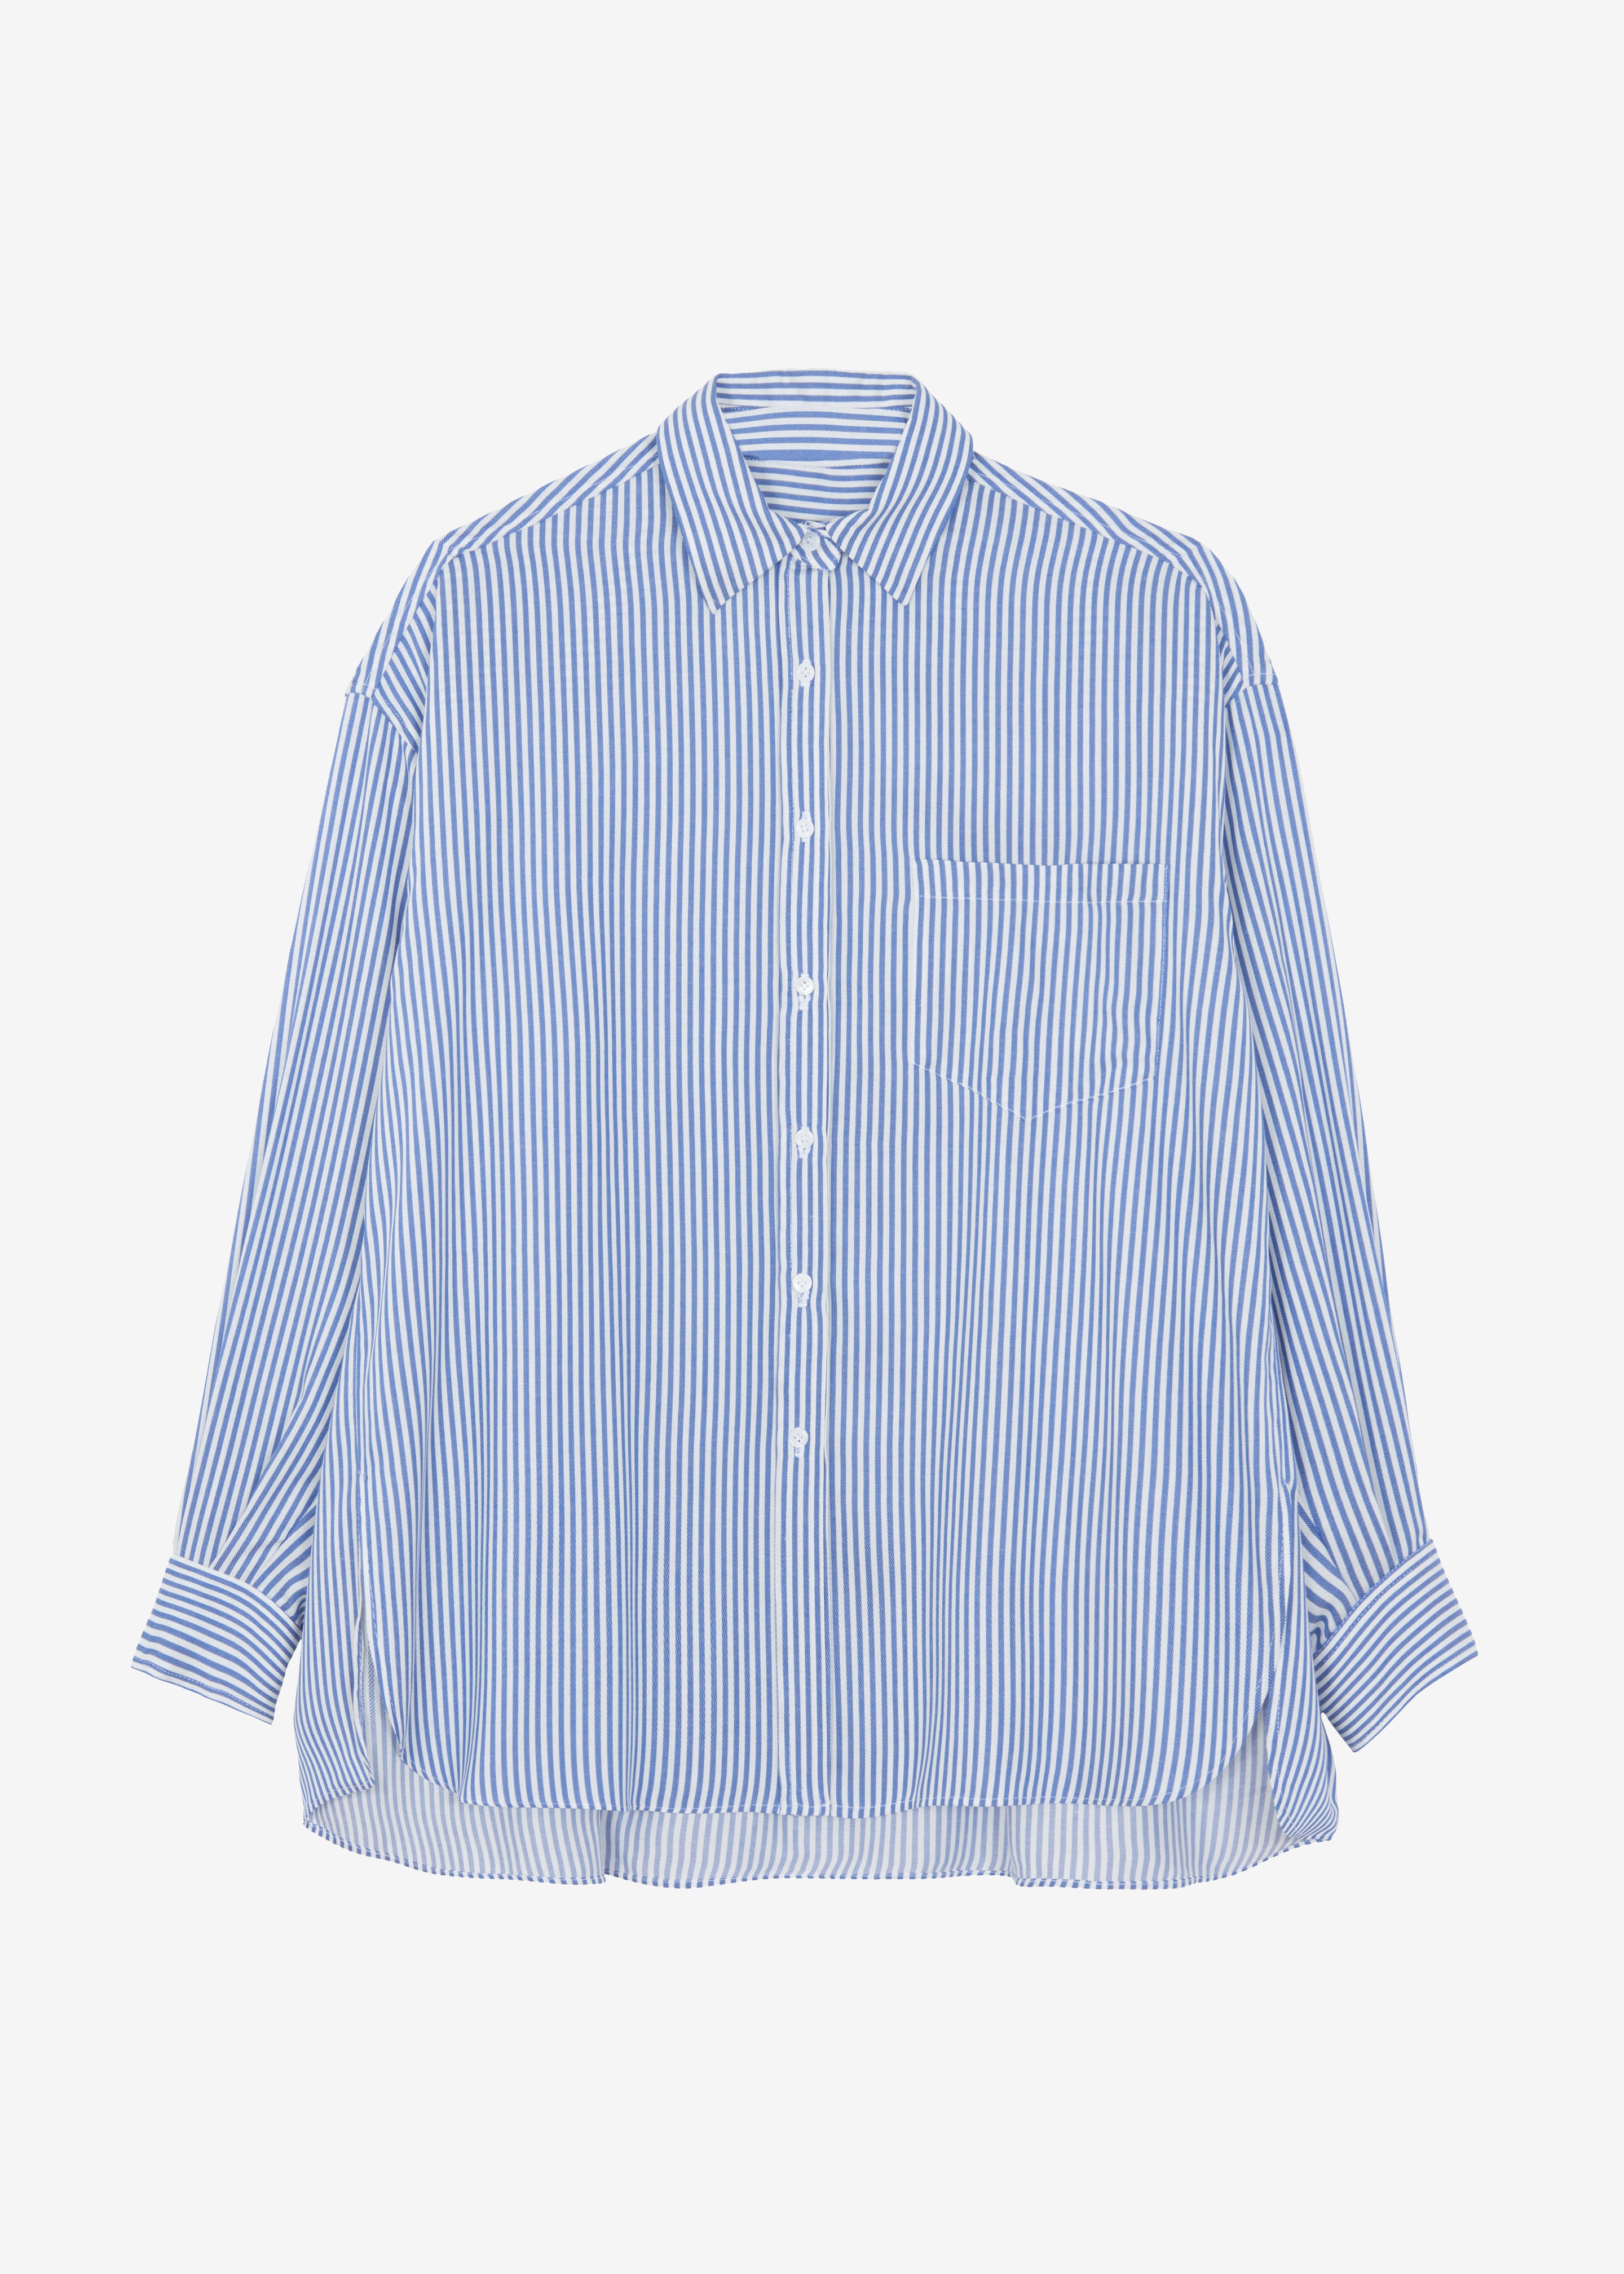 Lui Fluid Shirt - White/Blue Stripe - 11